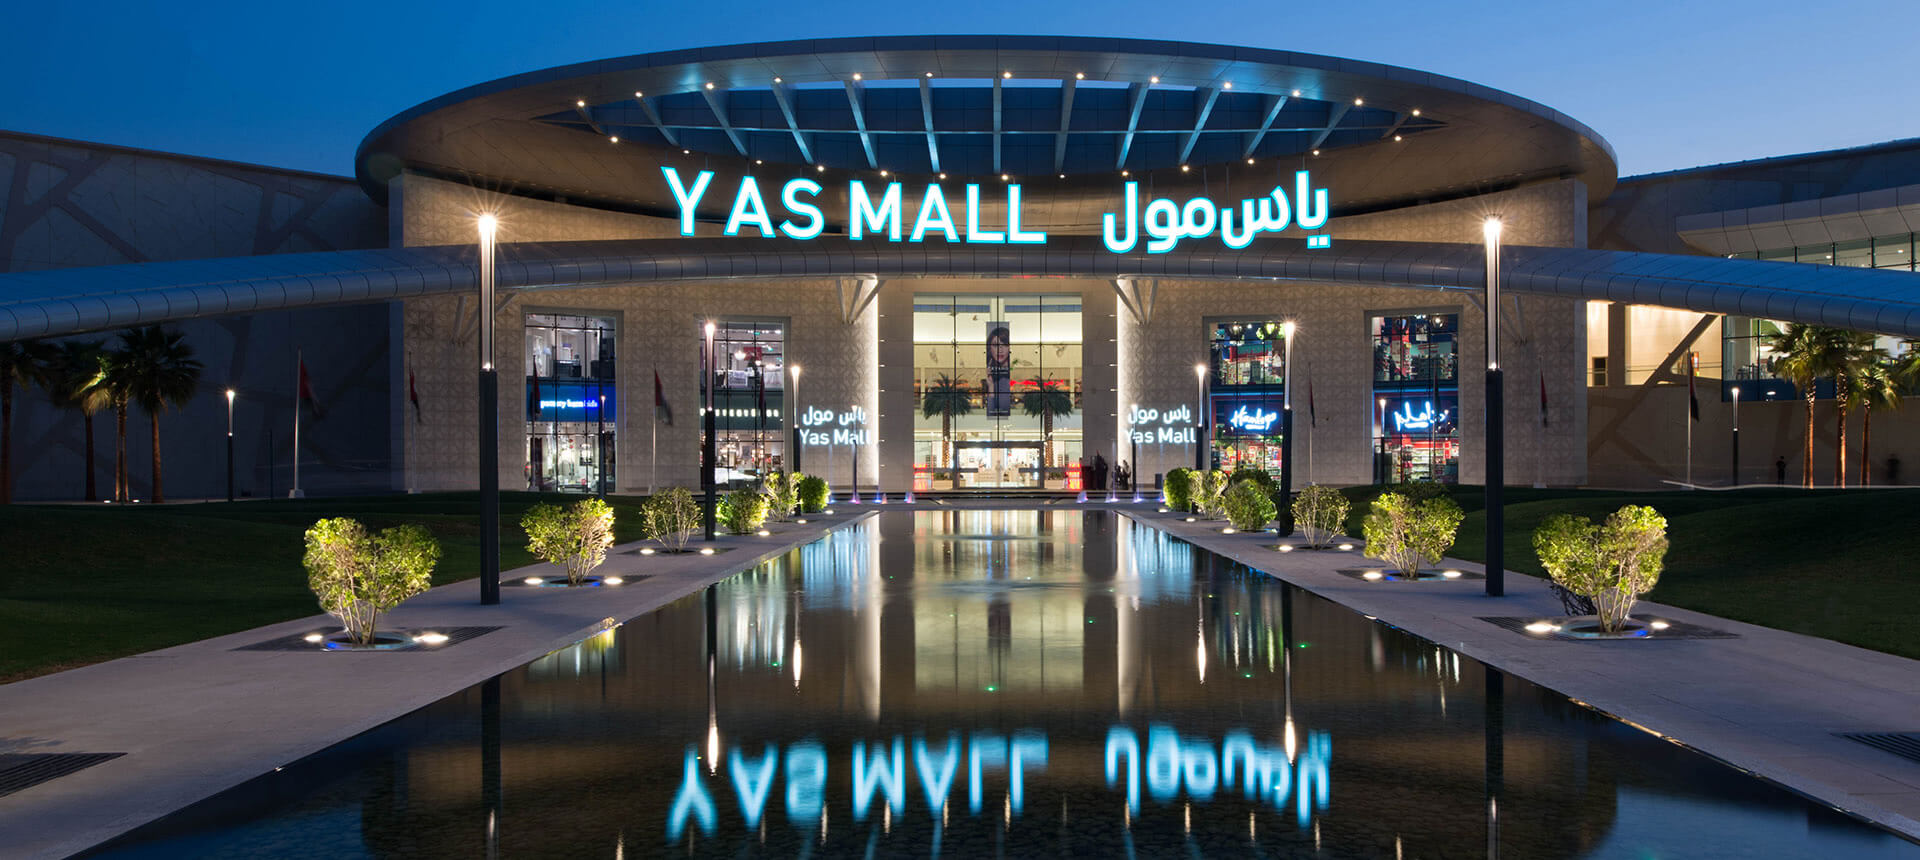 vans yas mall